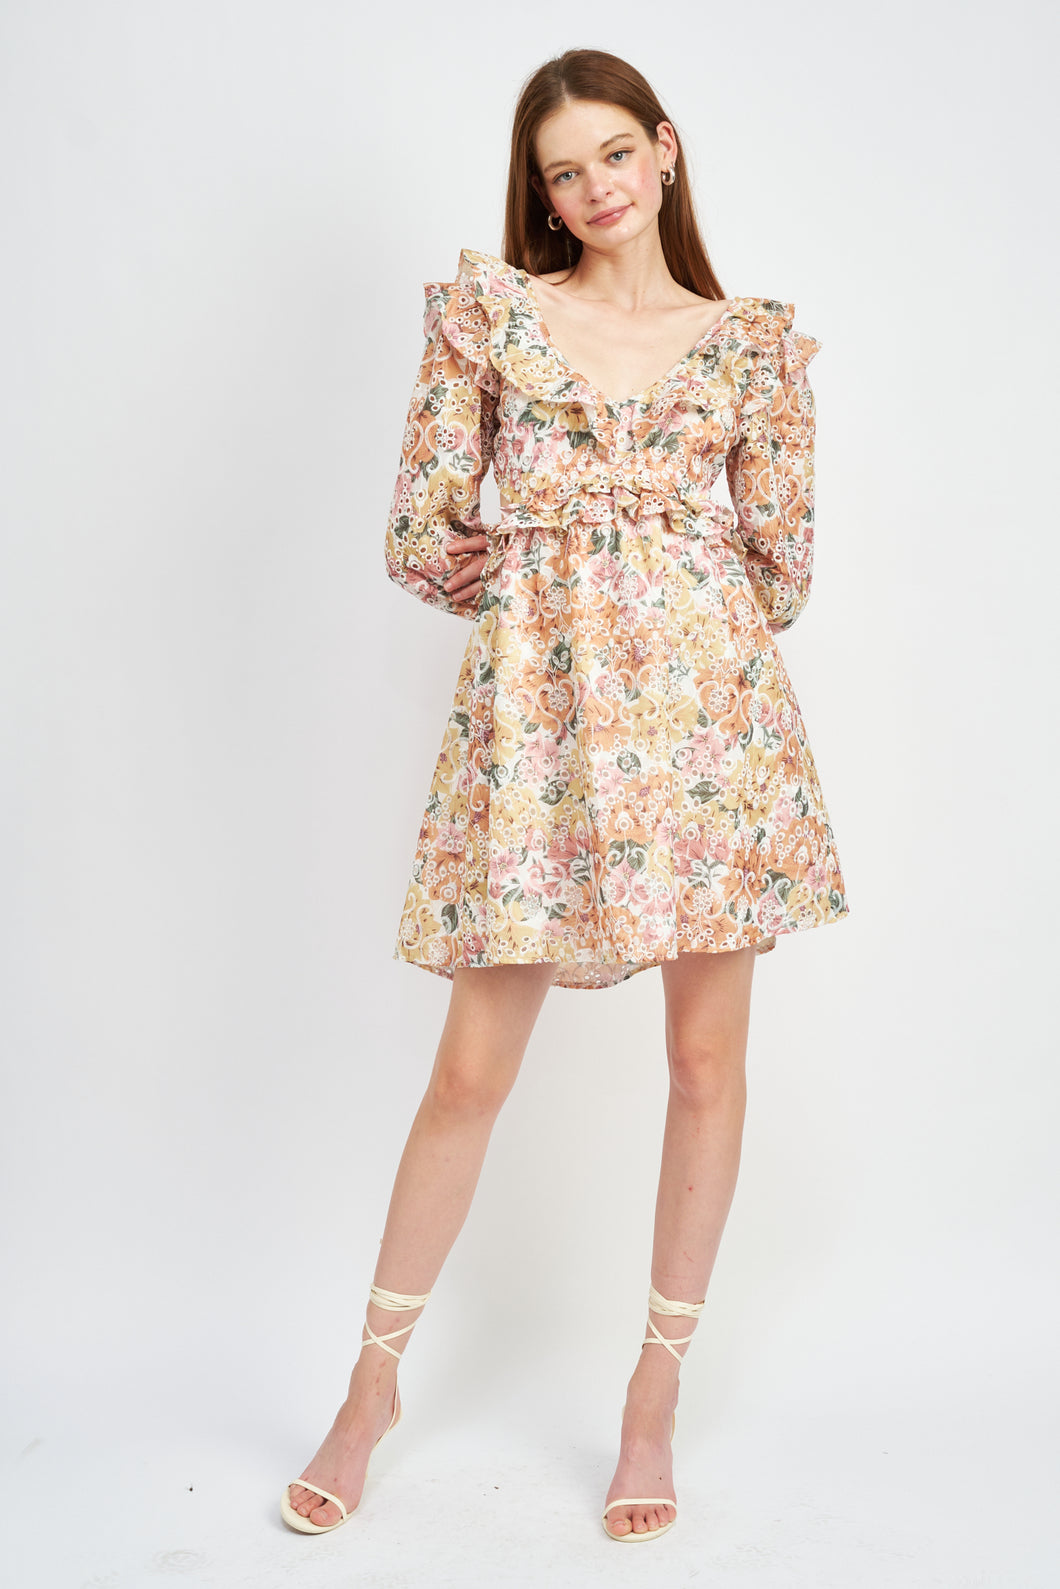 Kayla Mini Dress